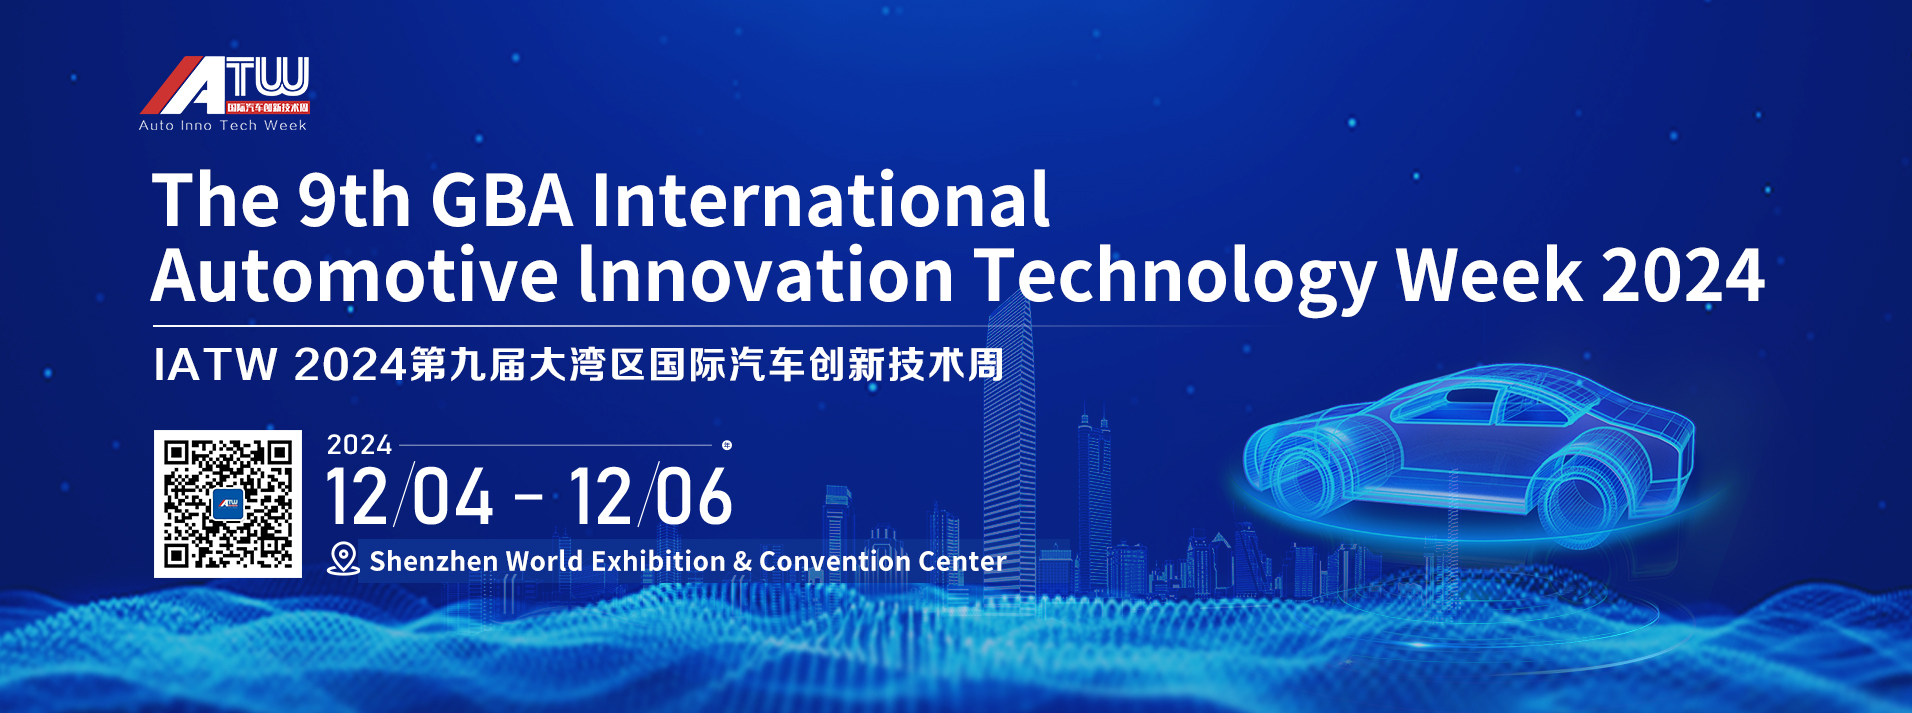 2024 The 9th GBA International Automotive Innovation Technology Week